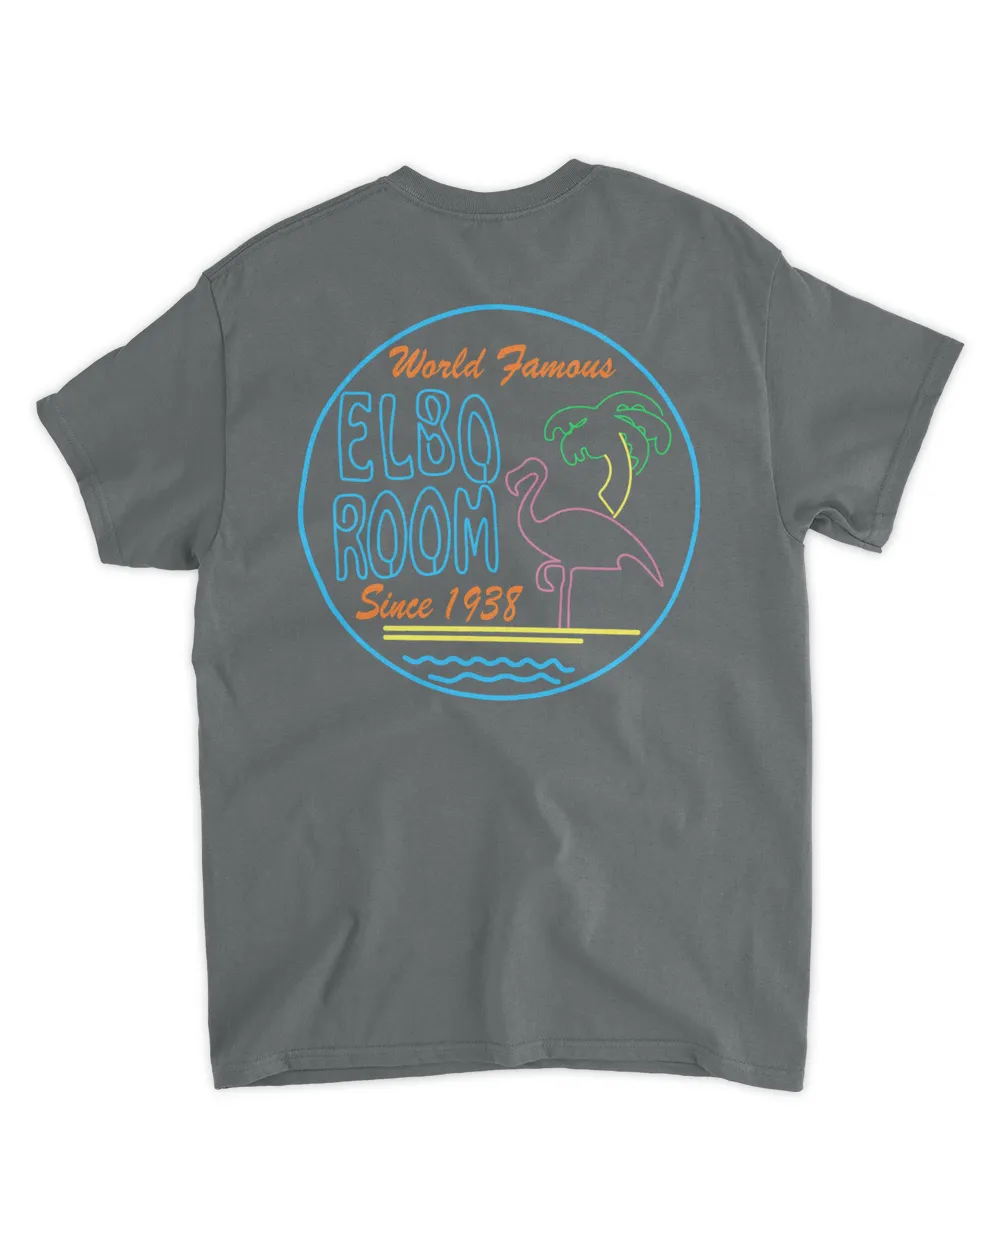 Matthew Tkachuk World Famous Elbo Room Since 1938 T-Shirt